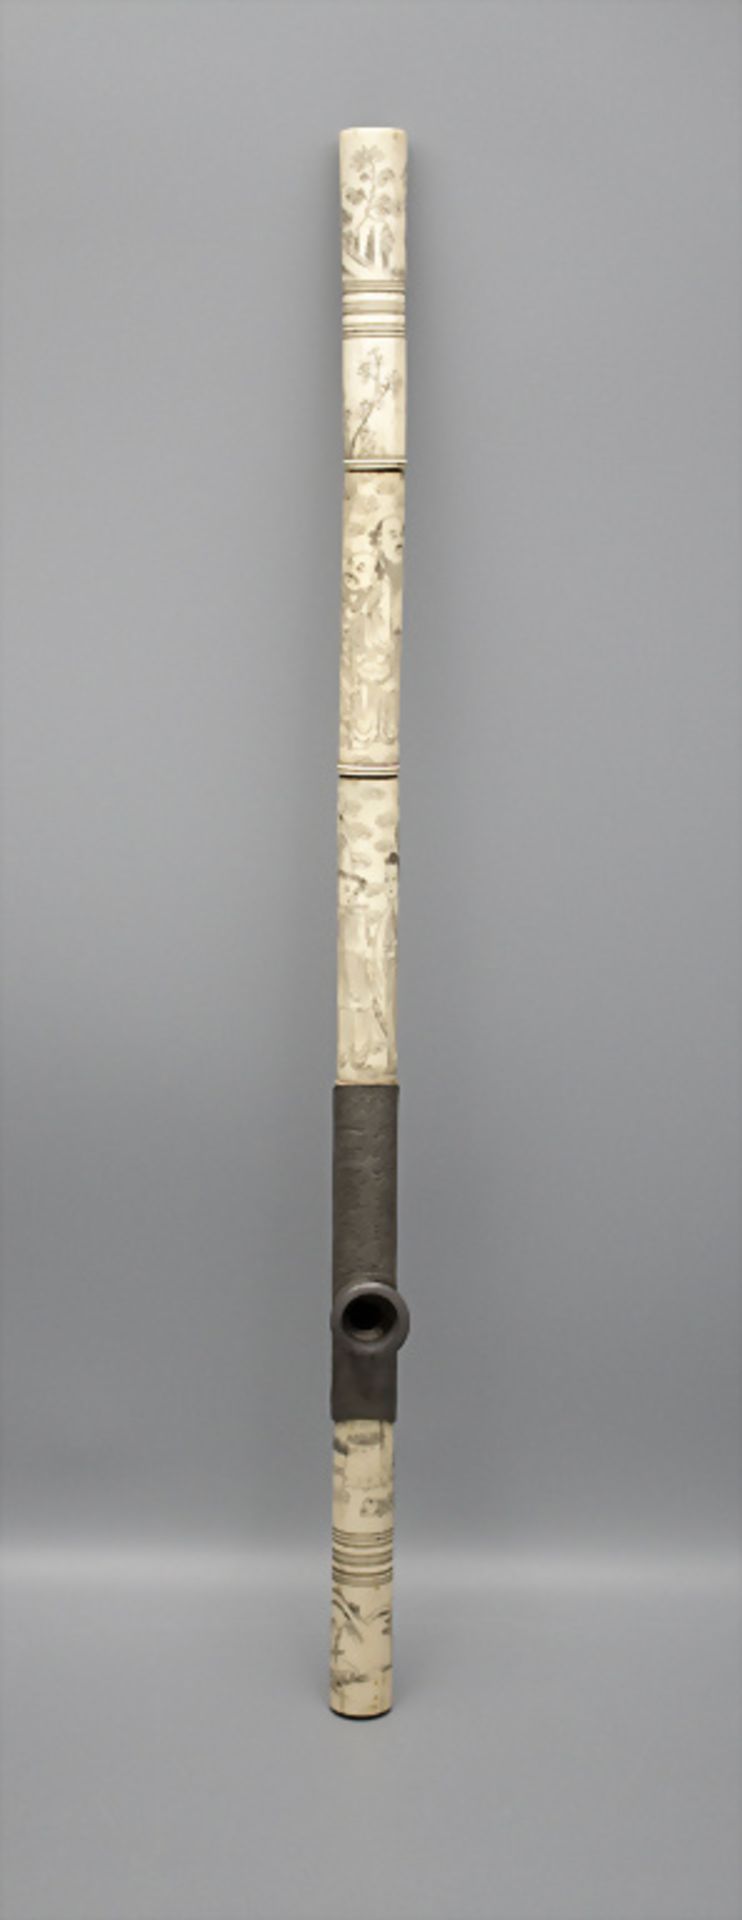 Opiumpfeife / An opium pipe, China, wohl 19. Jh.